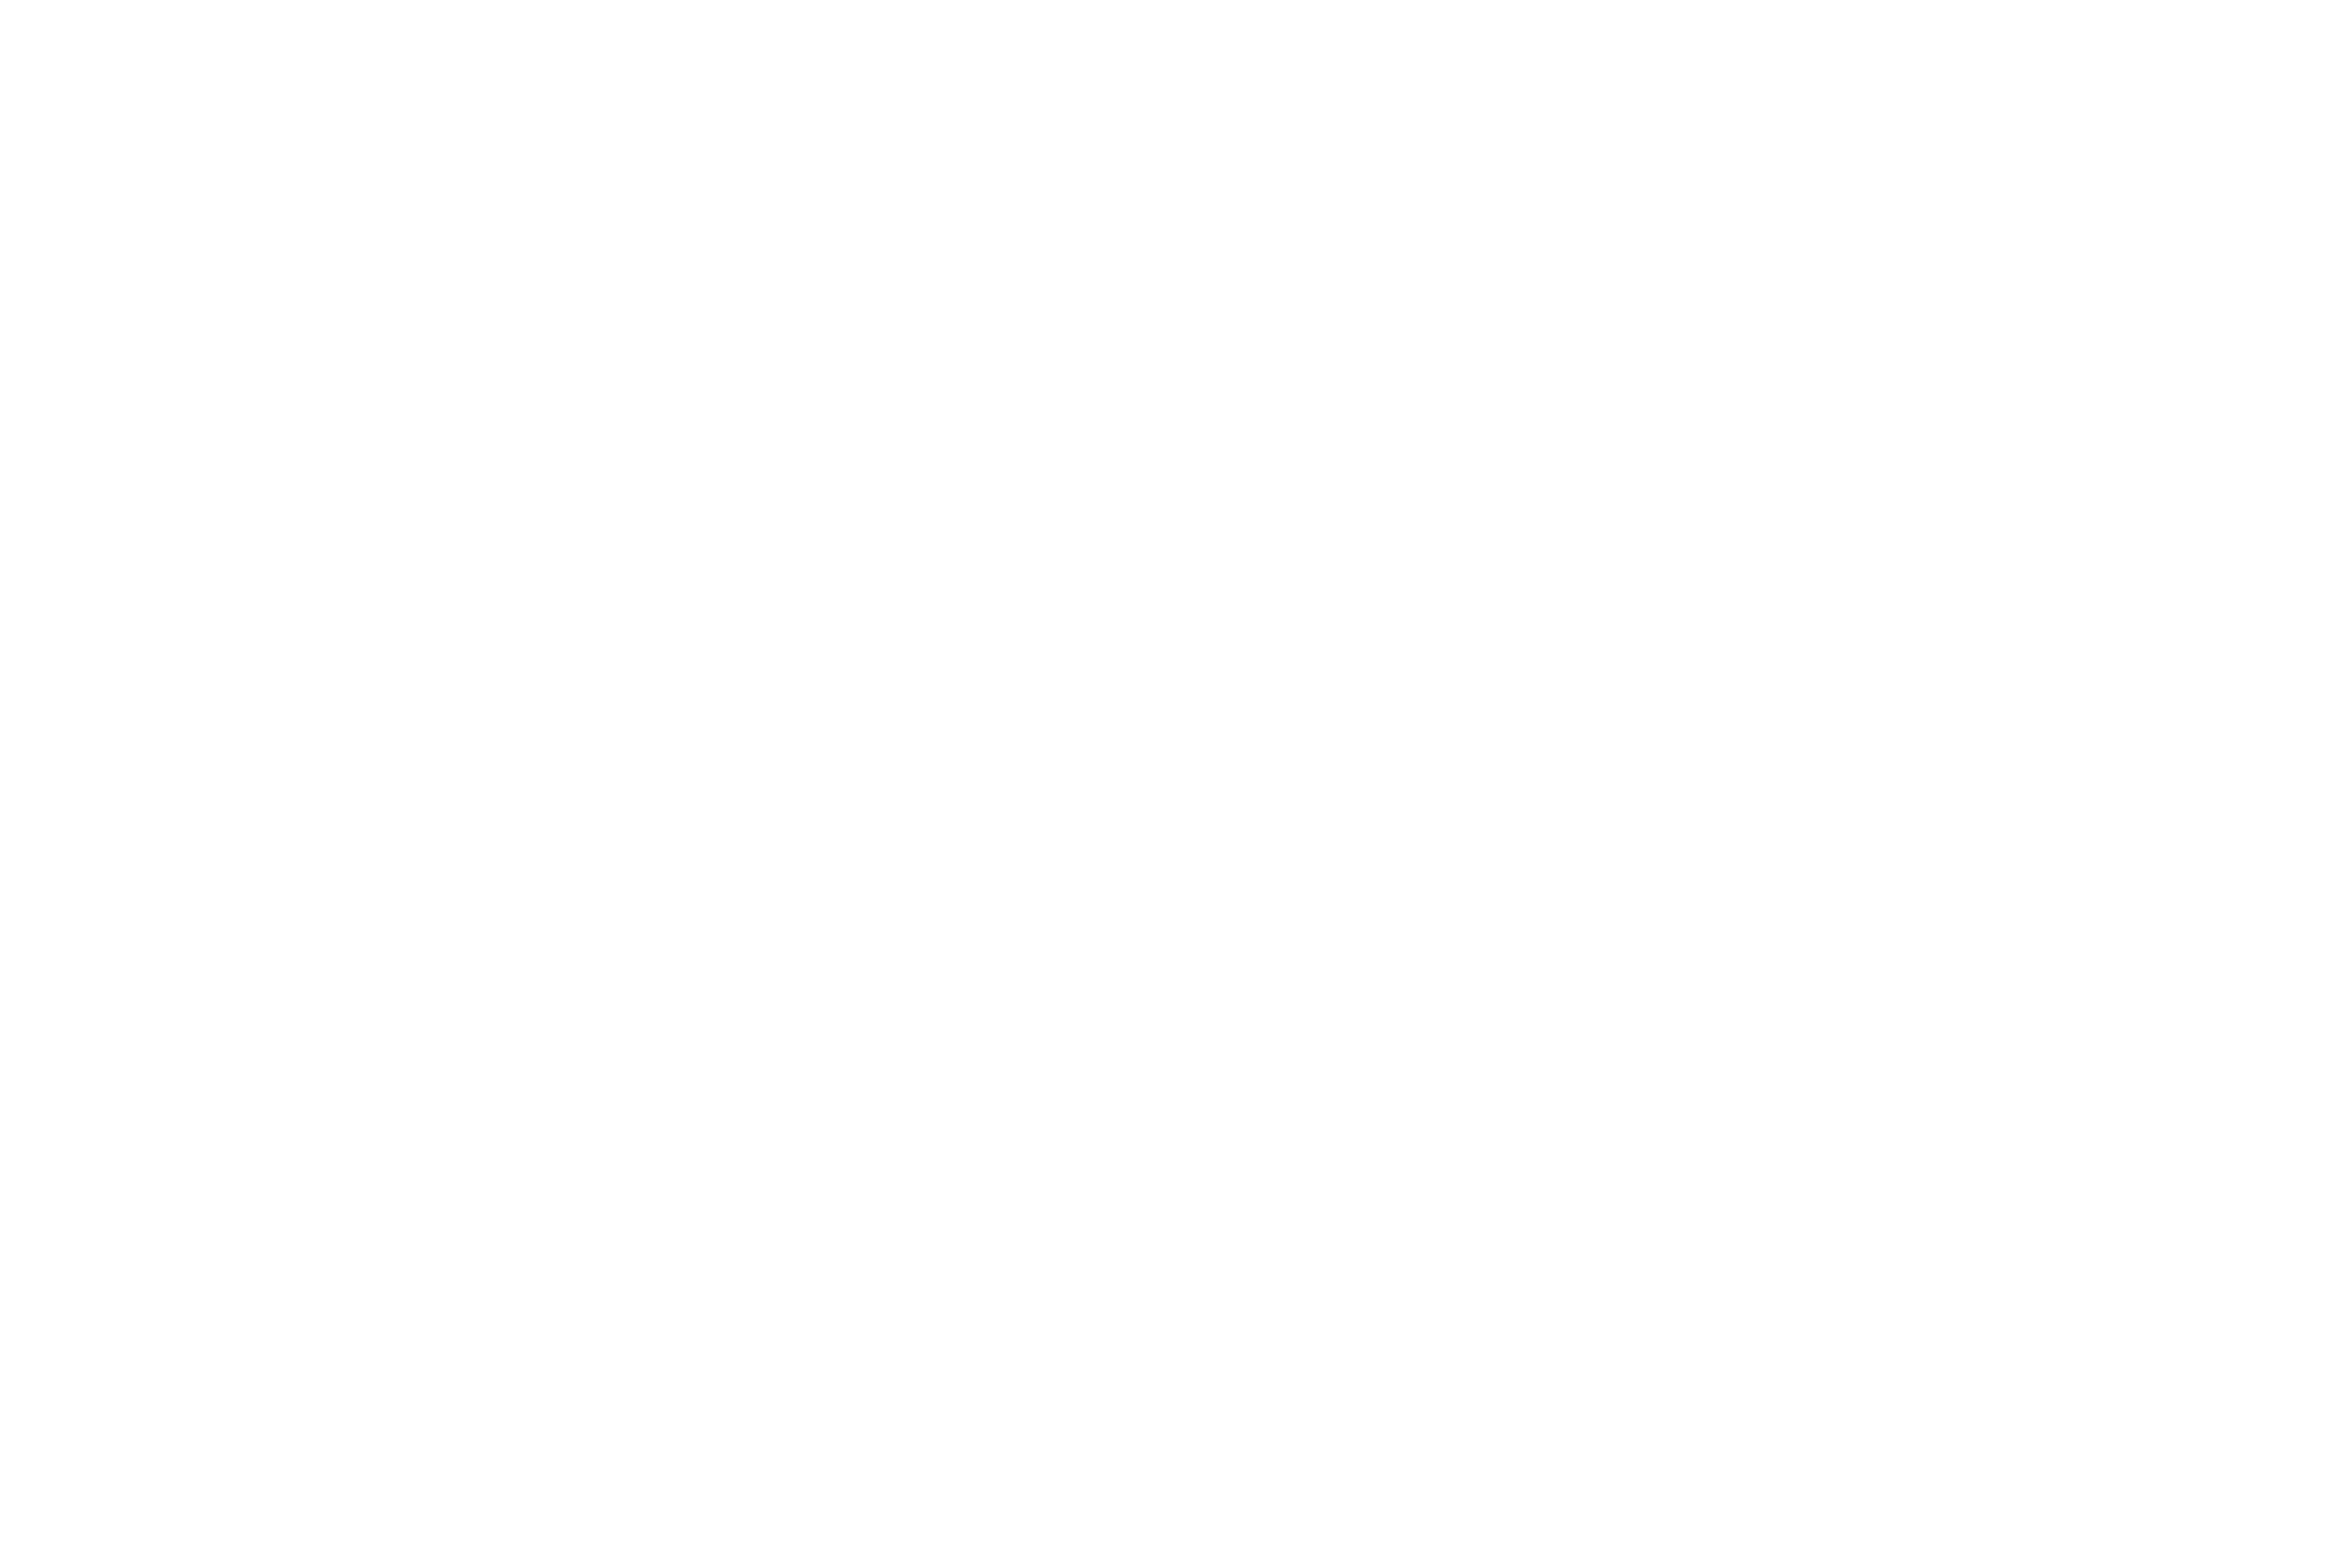 Scott Williams Photography